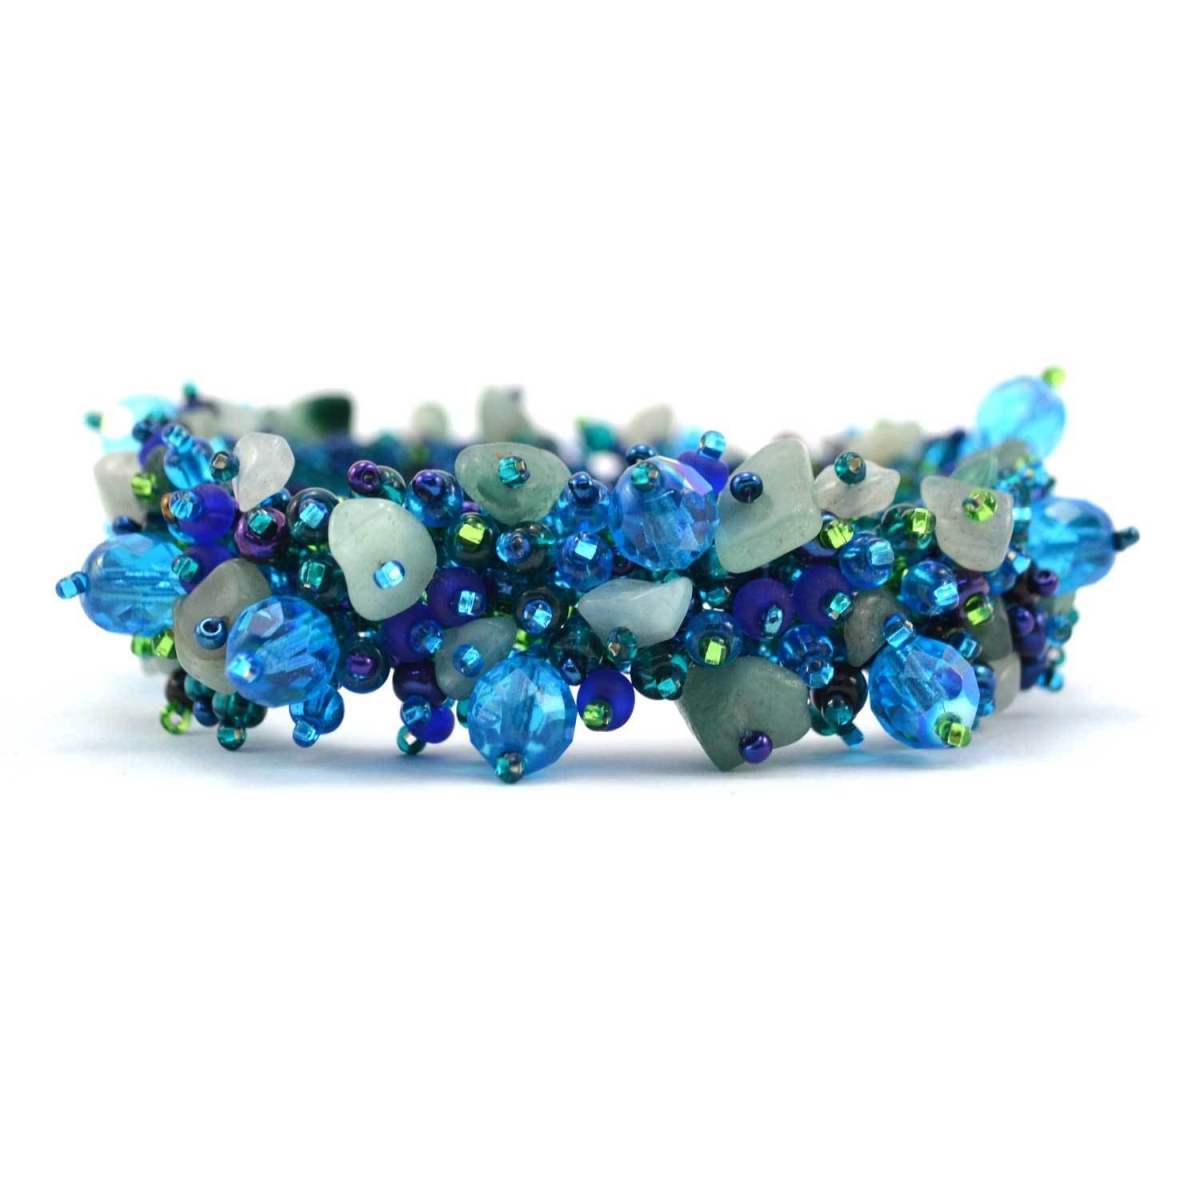 Lijbr19-33-220320 Magnetic Stone Caterpillar Bracelet, Blue